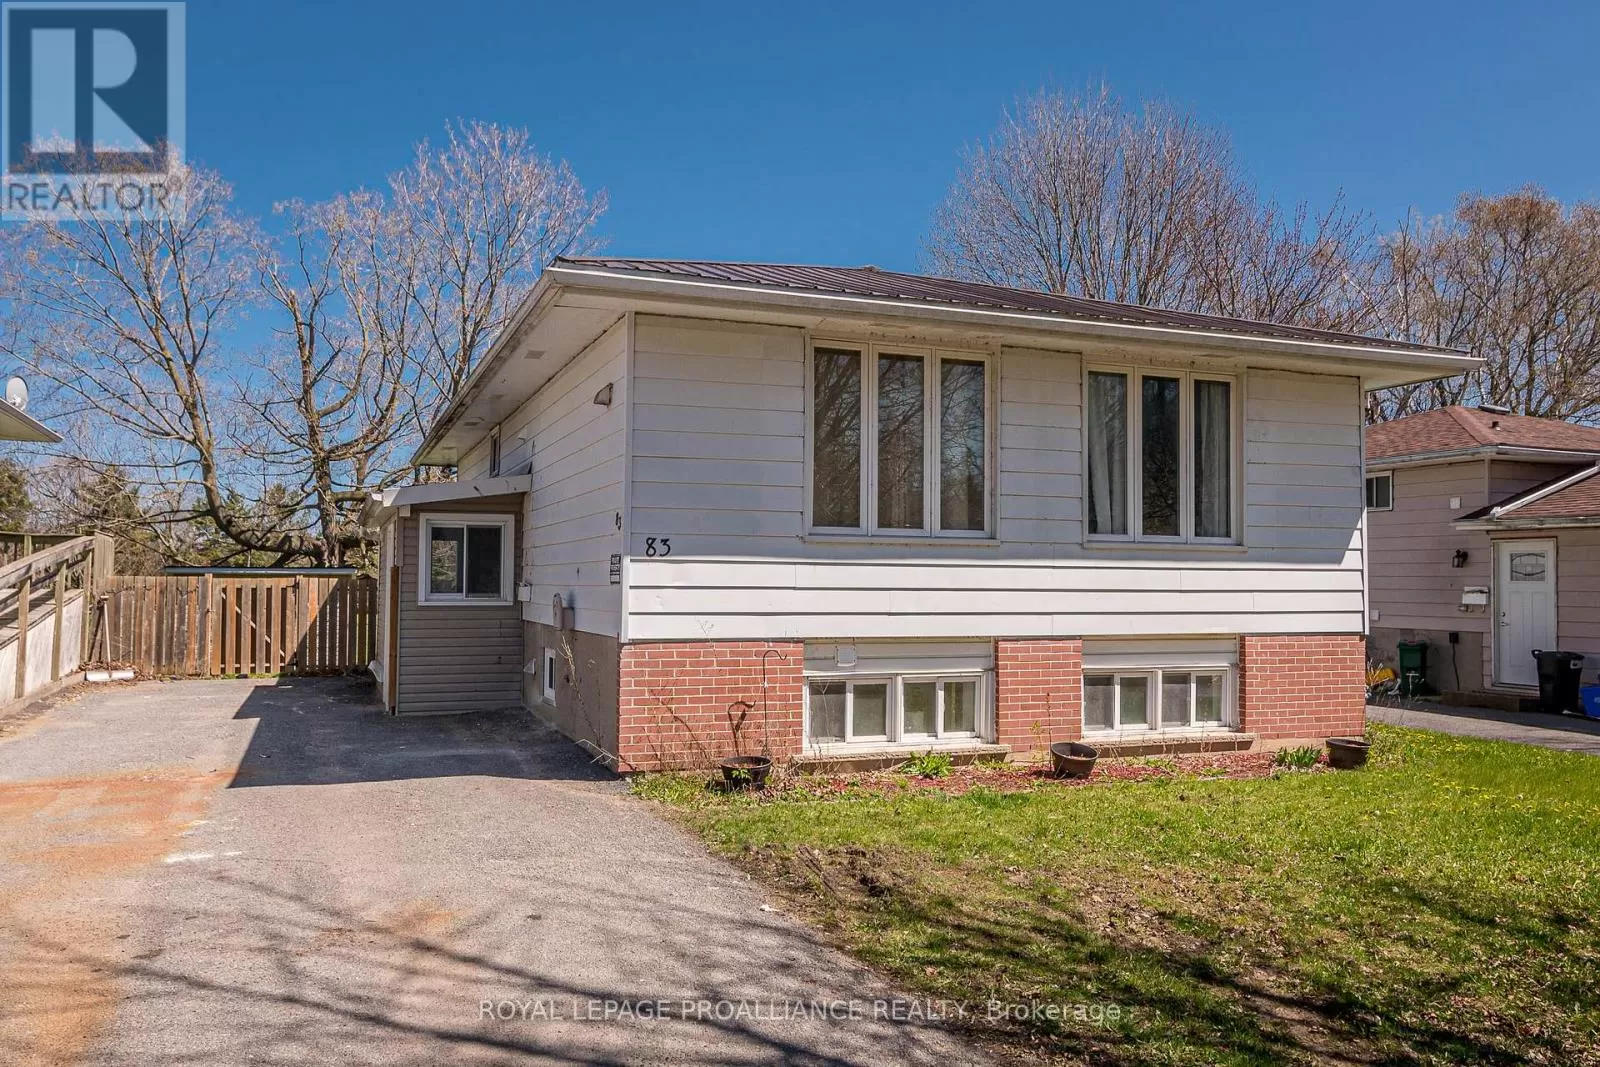 House for rent: 83 Calderwood Drive, Kingston, Ontario K7M 6L5